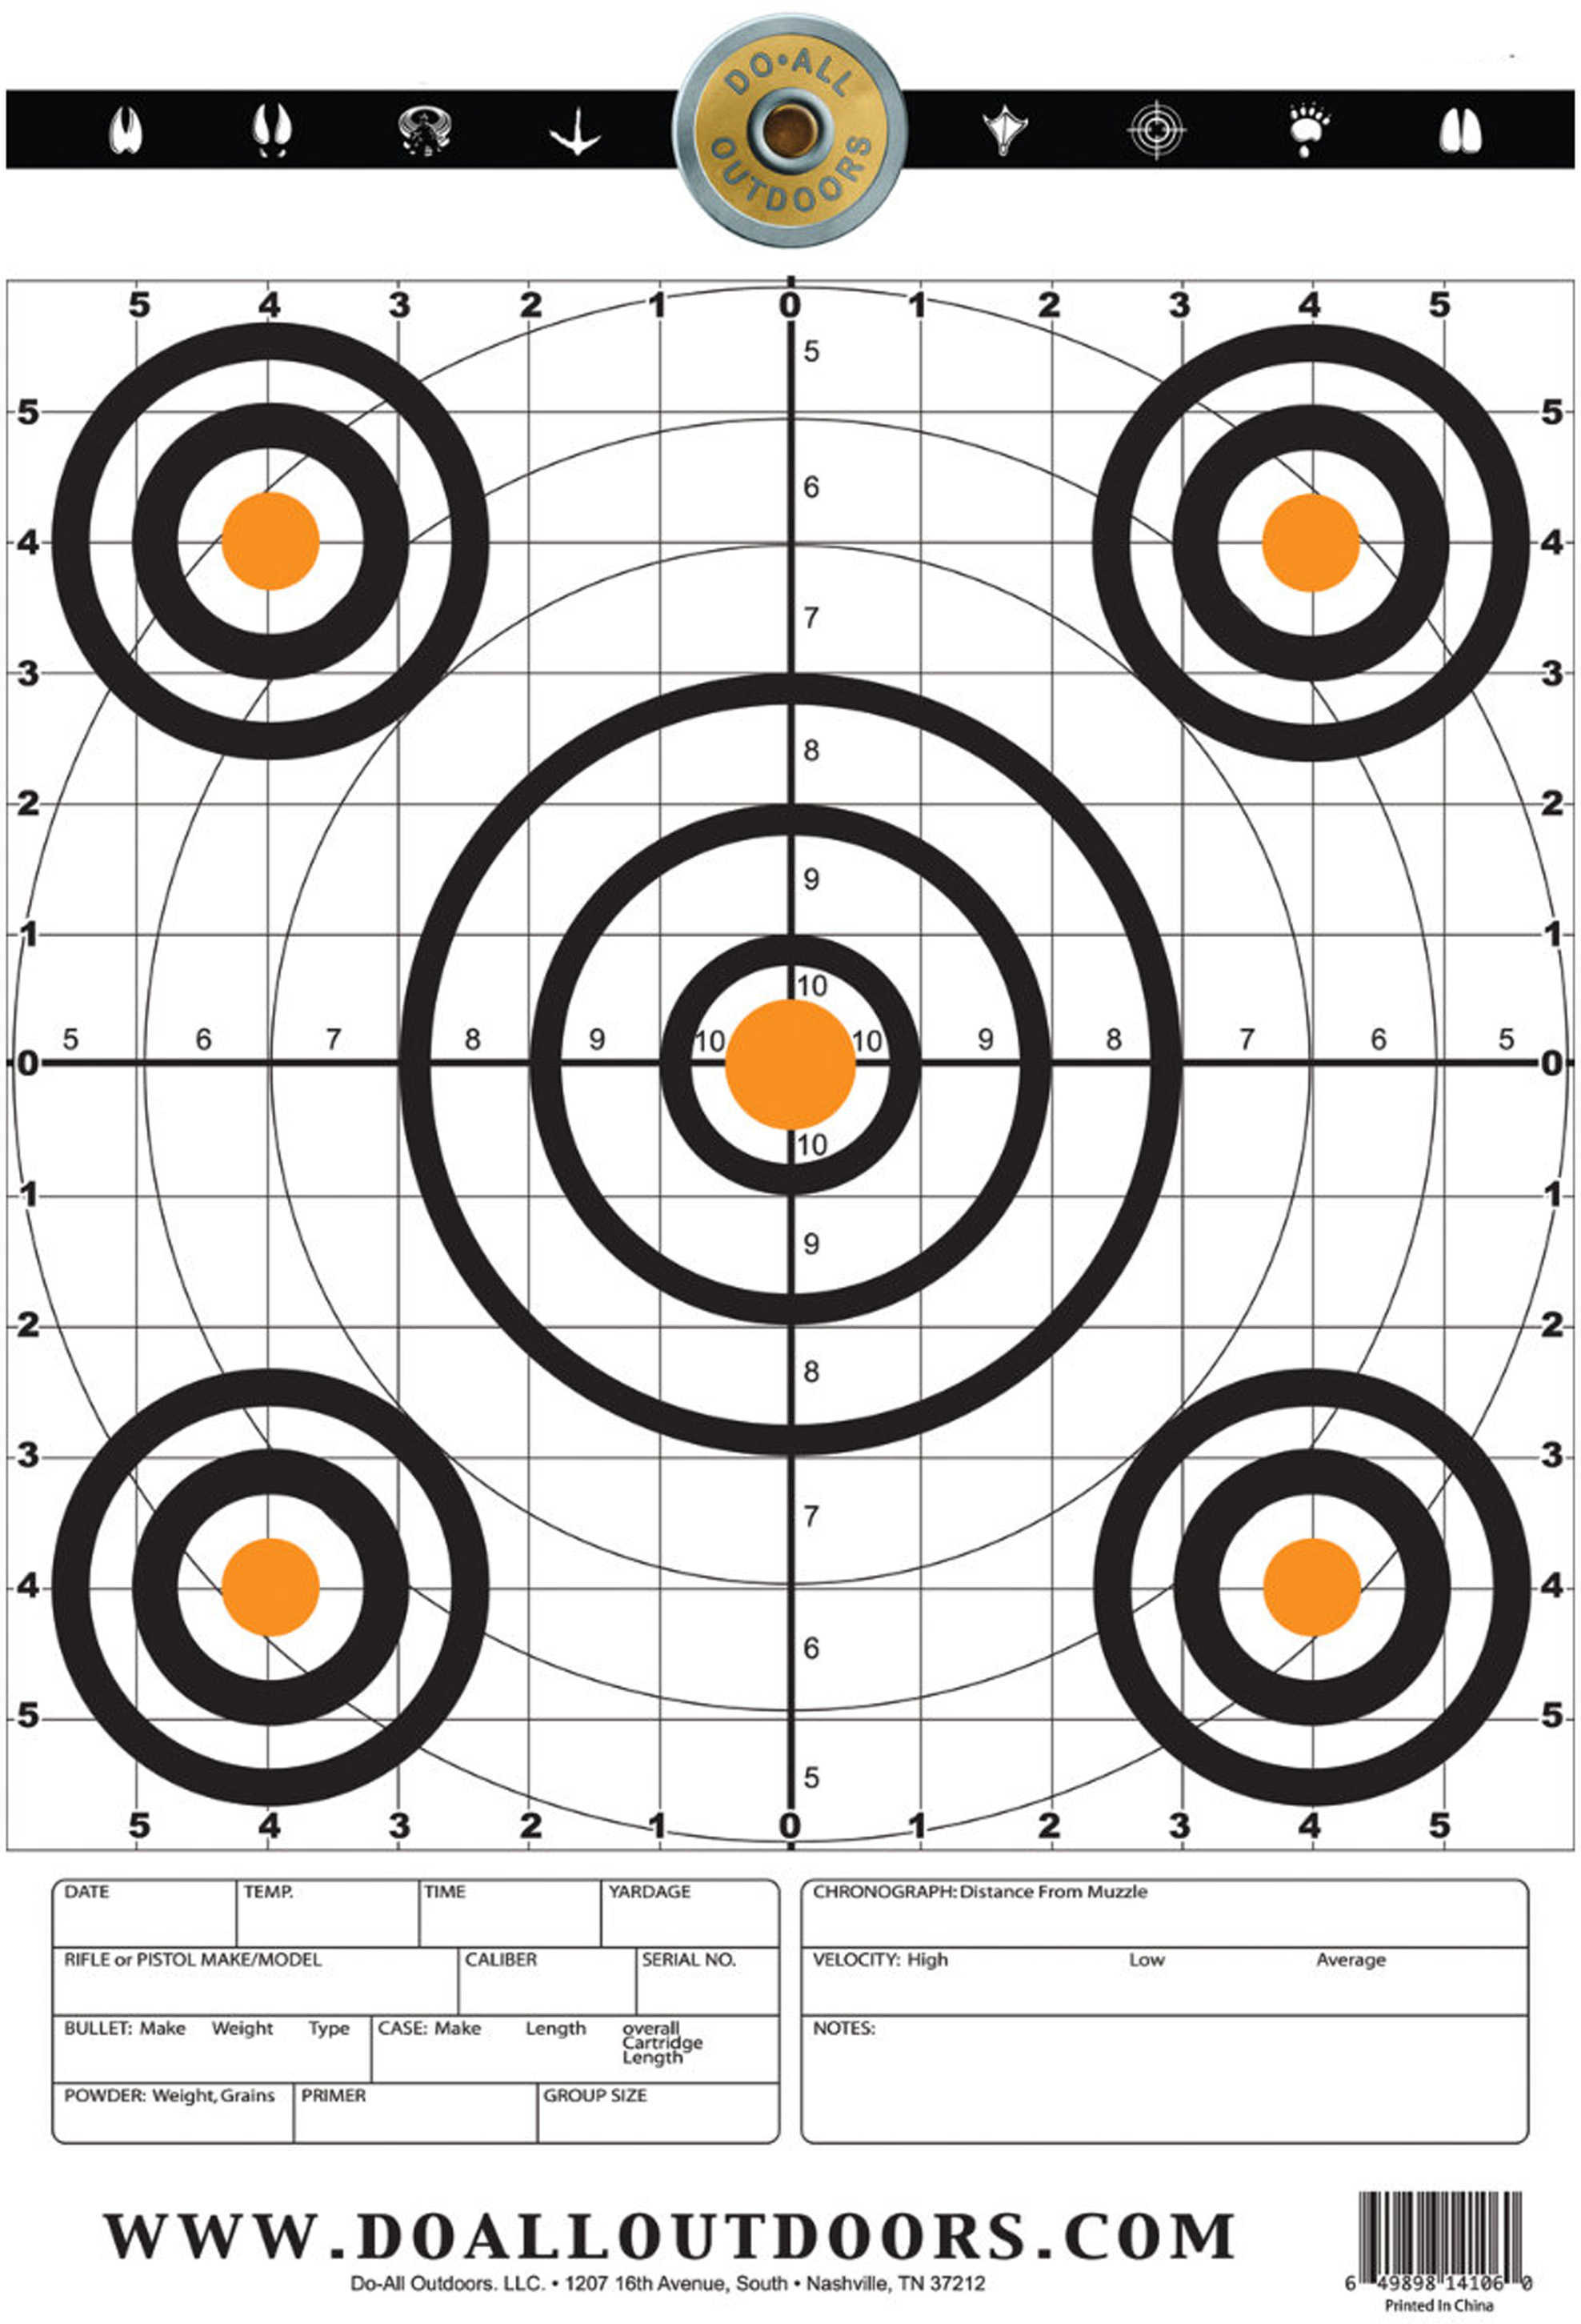 Do-All Traps Accu Blue Precision Paper Target 12"X18" 10Pk